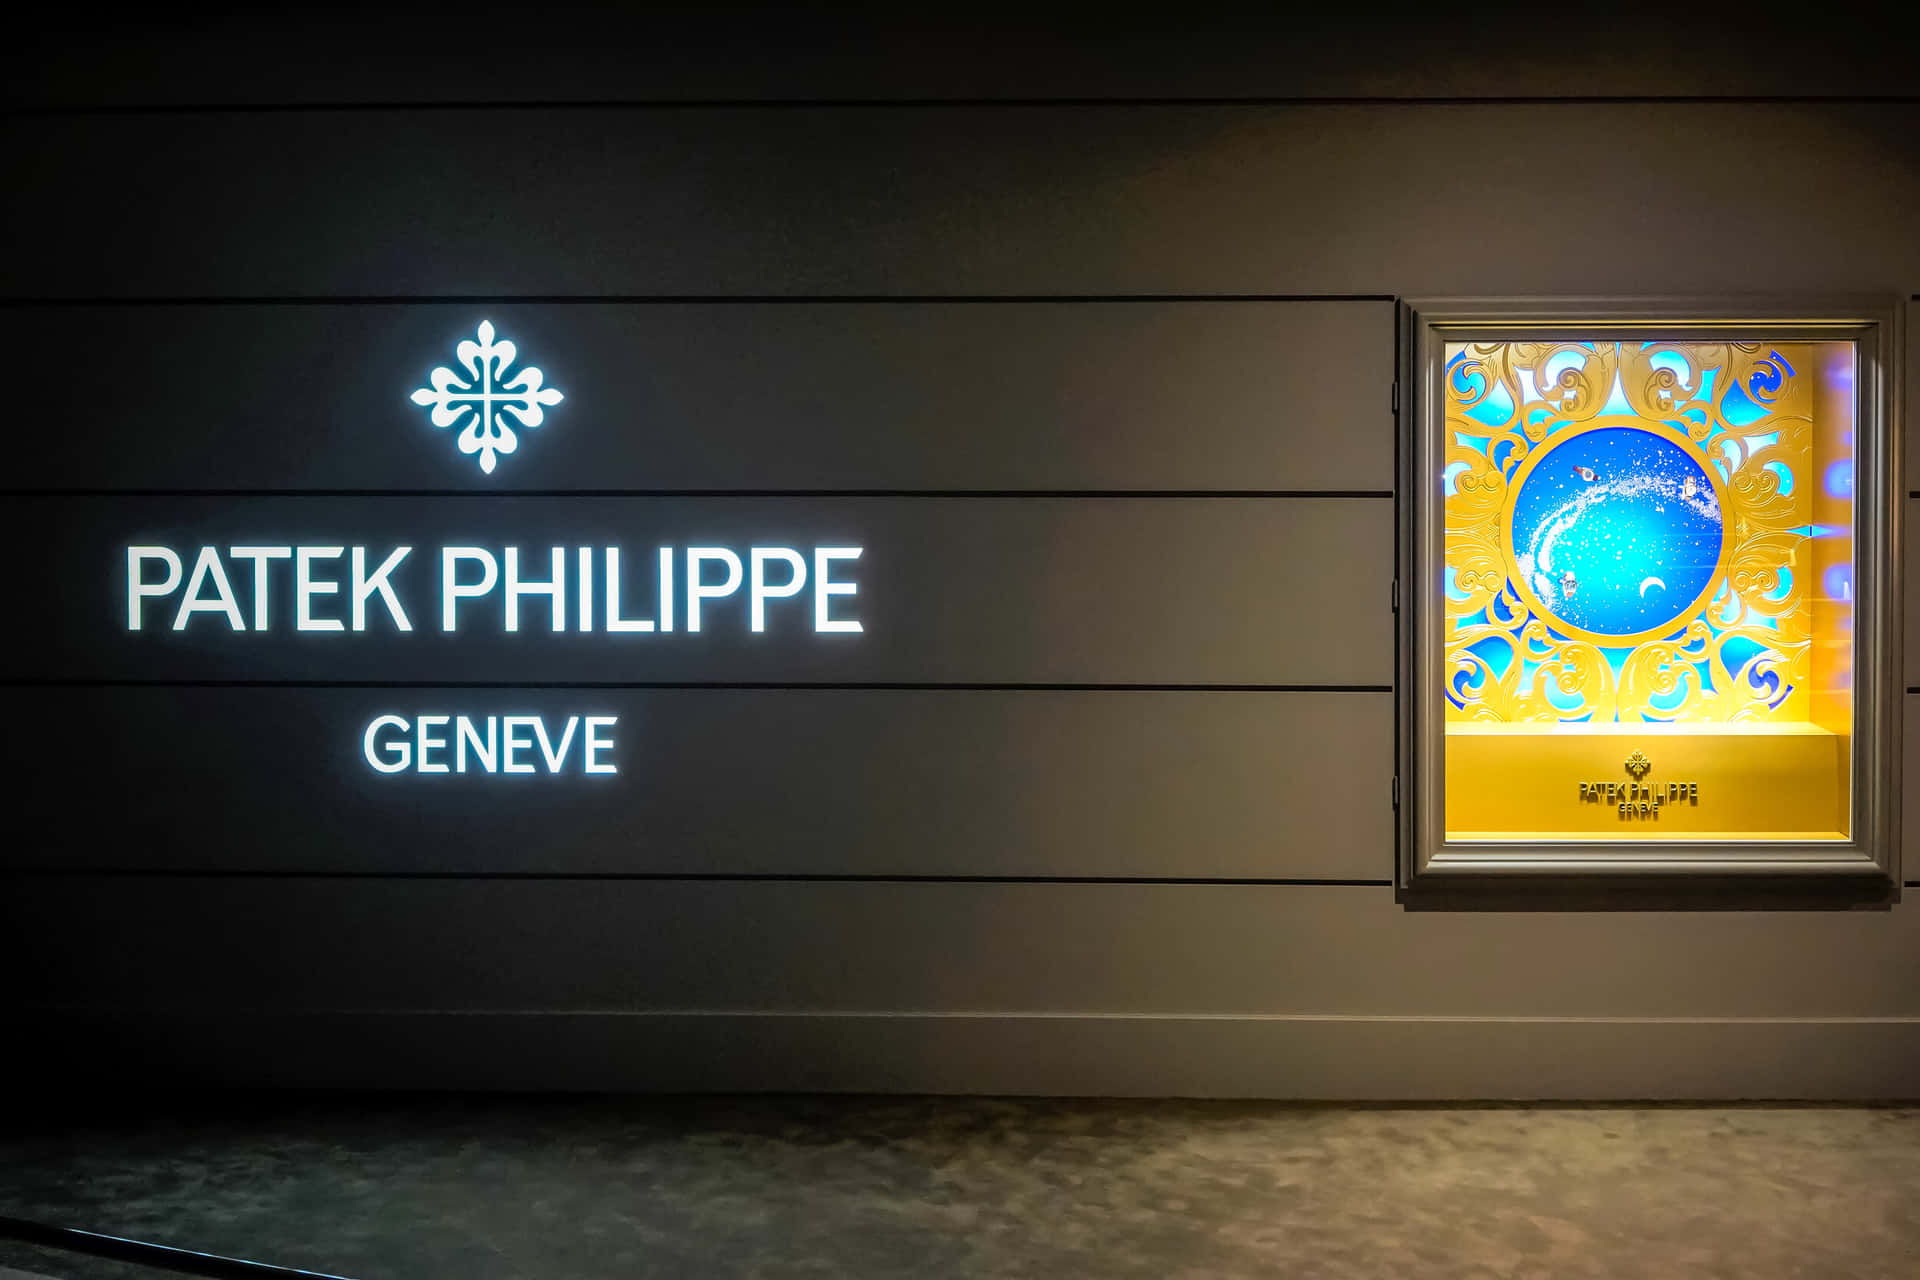 Patek Philippe 2500 X 1667 Wallpaper